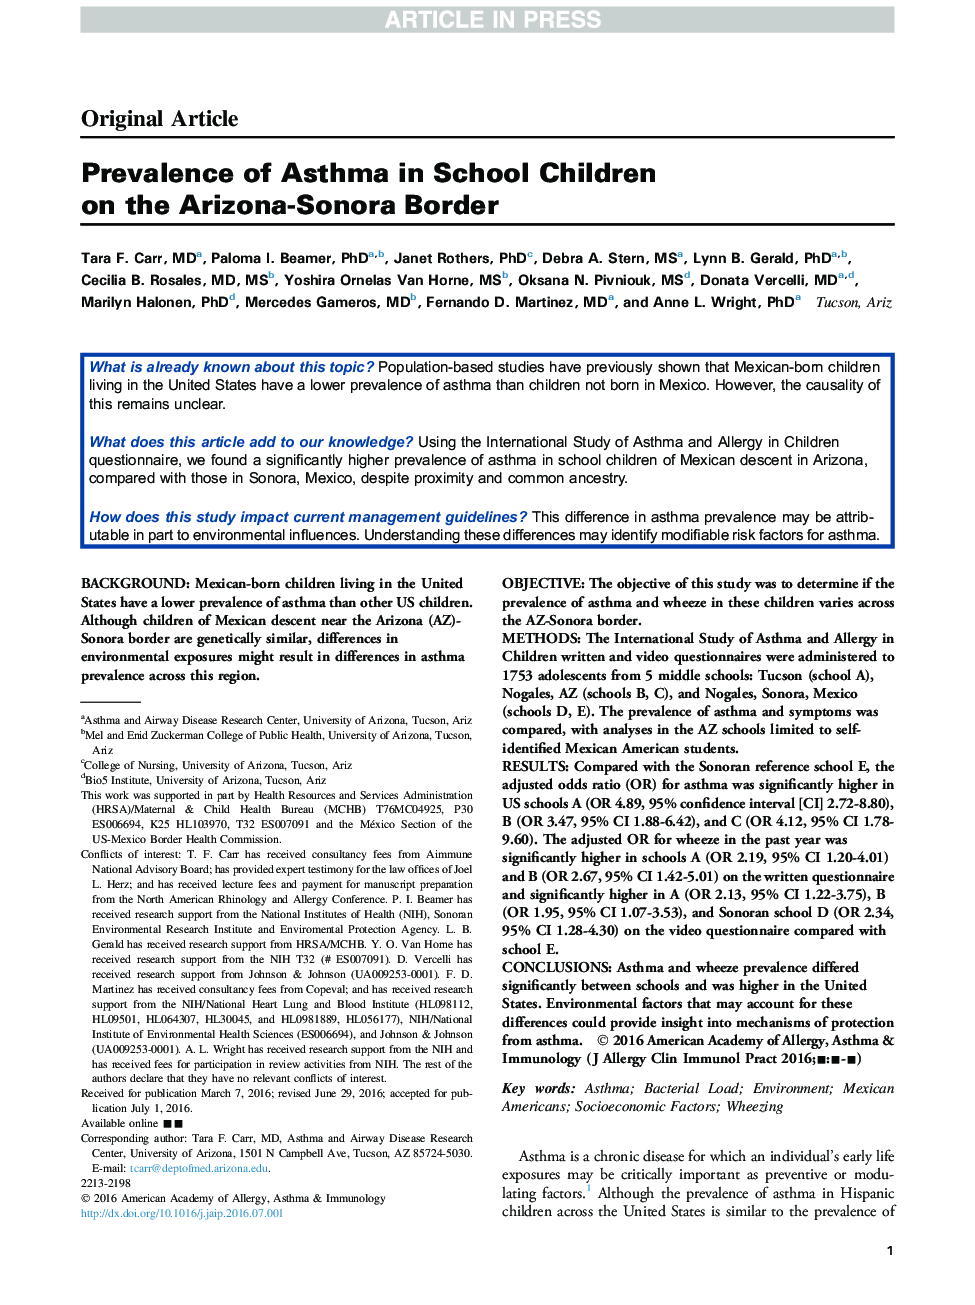 Prevalence of Asthma in School Children on the Arizona-Sonora Border